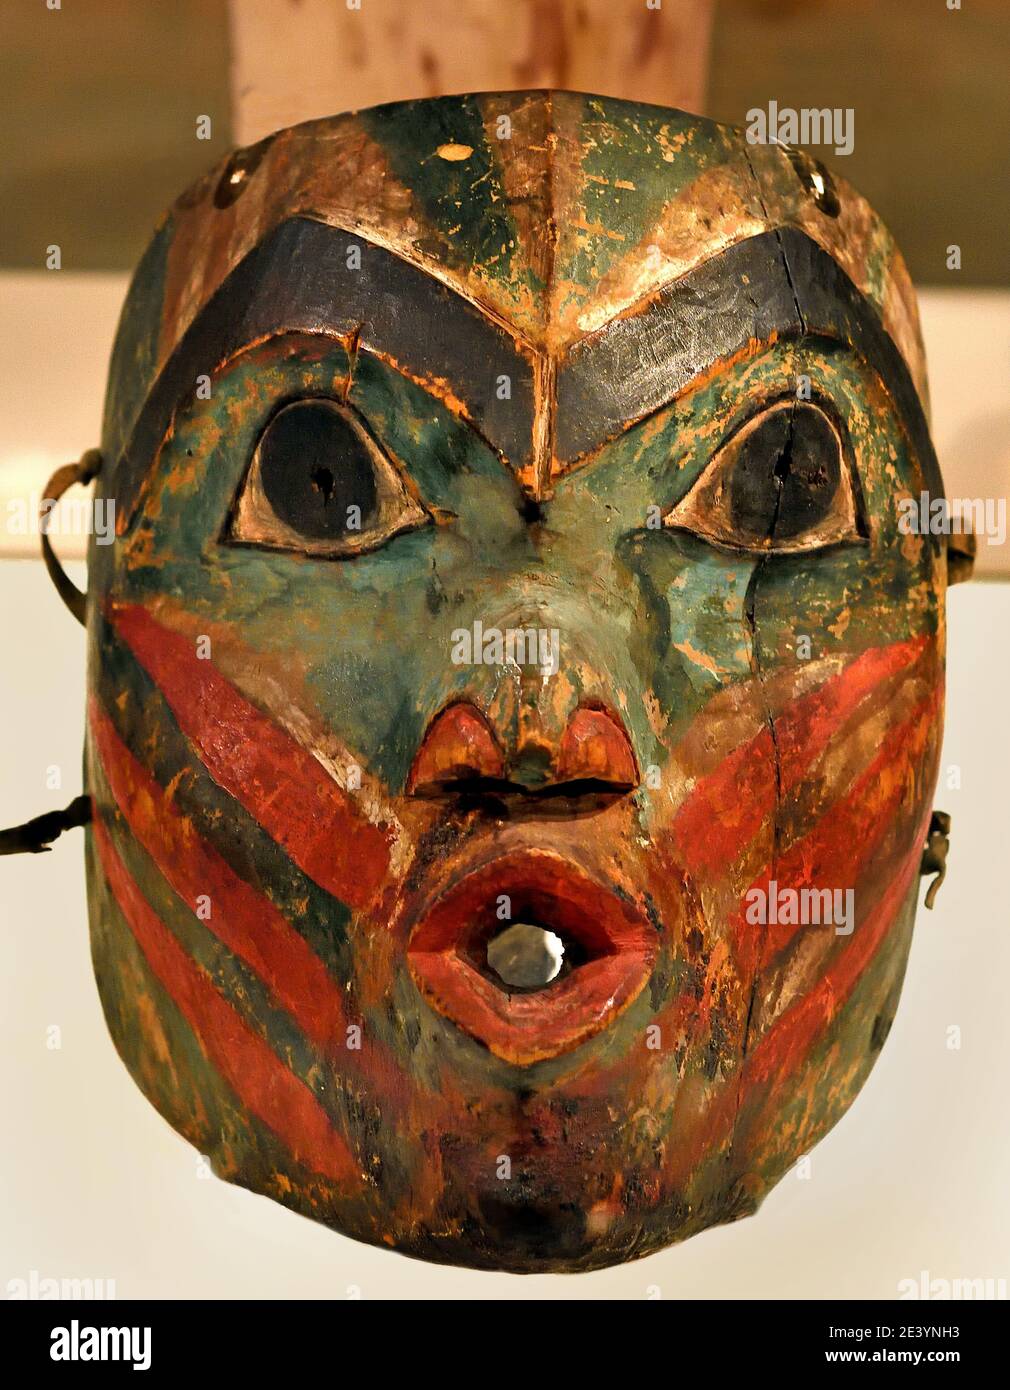 Maske 1800-1850 Kultur Tlingit, Kanada, Kanada, Kanada, USA, USA, NORDWESTKÜSTE, ALASKA Stockfoto